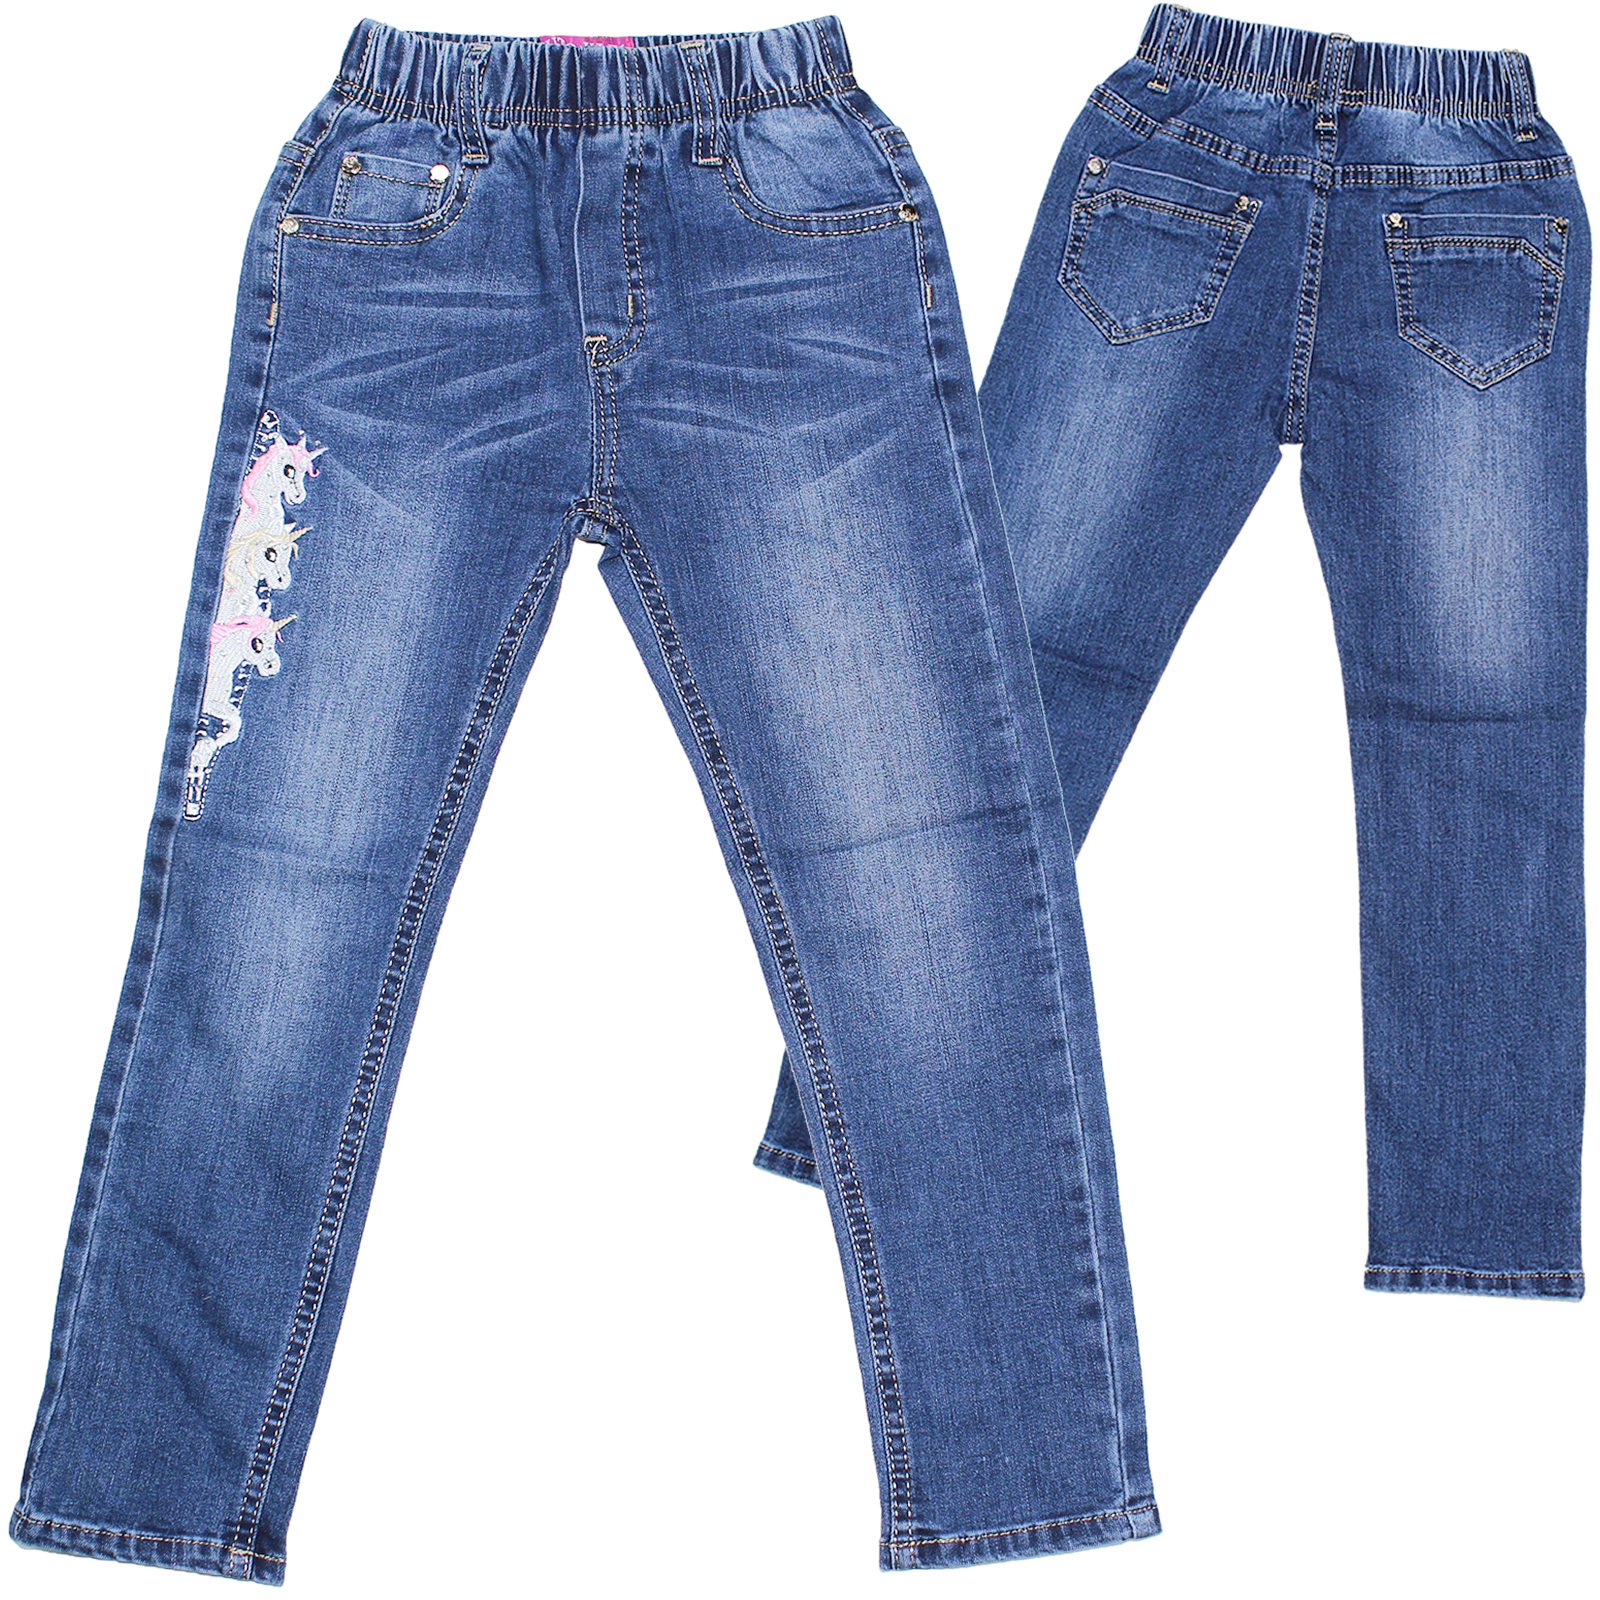 Sotala Mädchen Kinderhose Kinderjeans Jeans Hose elastischer Bund Blau Einhorn Motiv